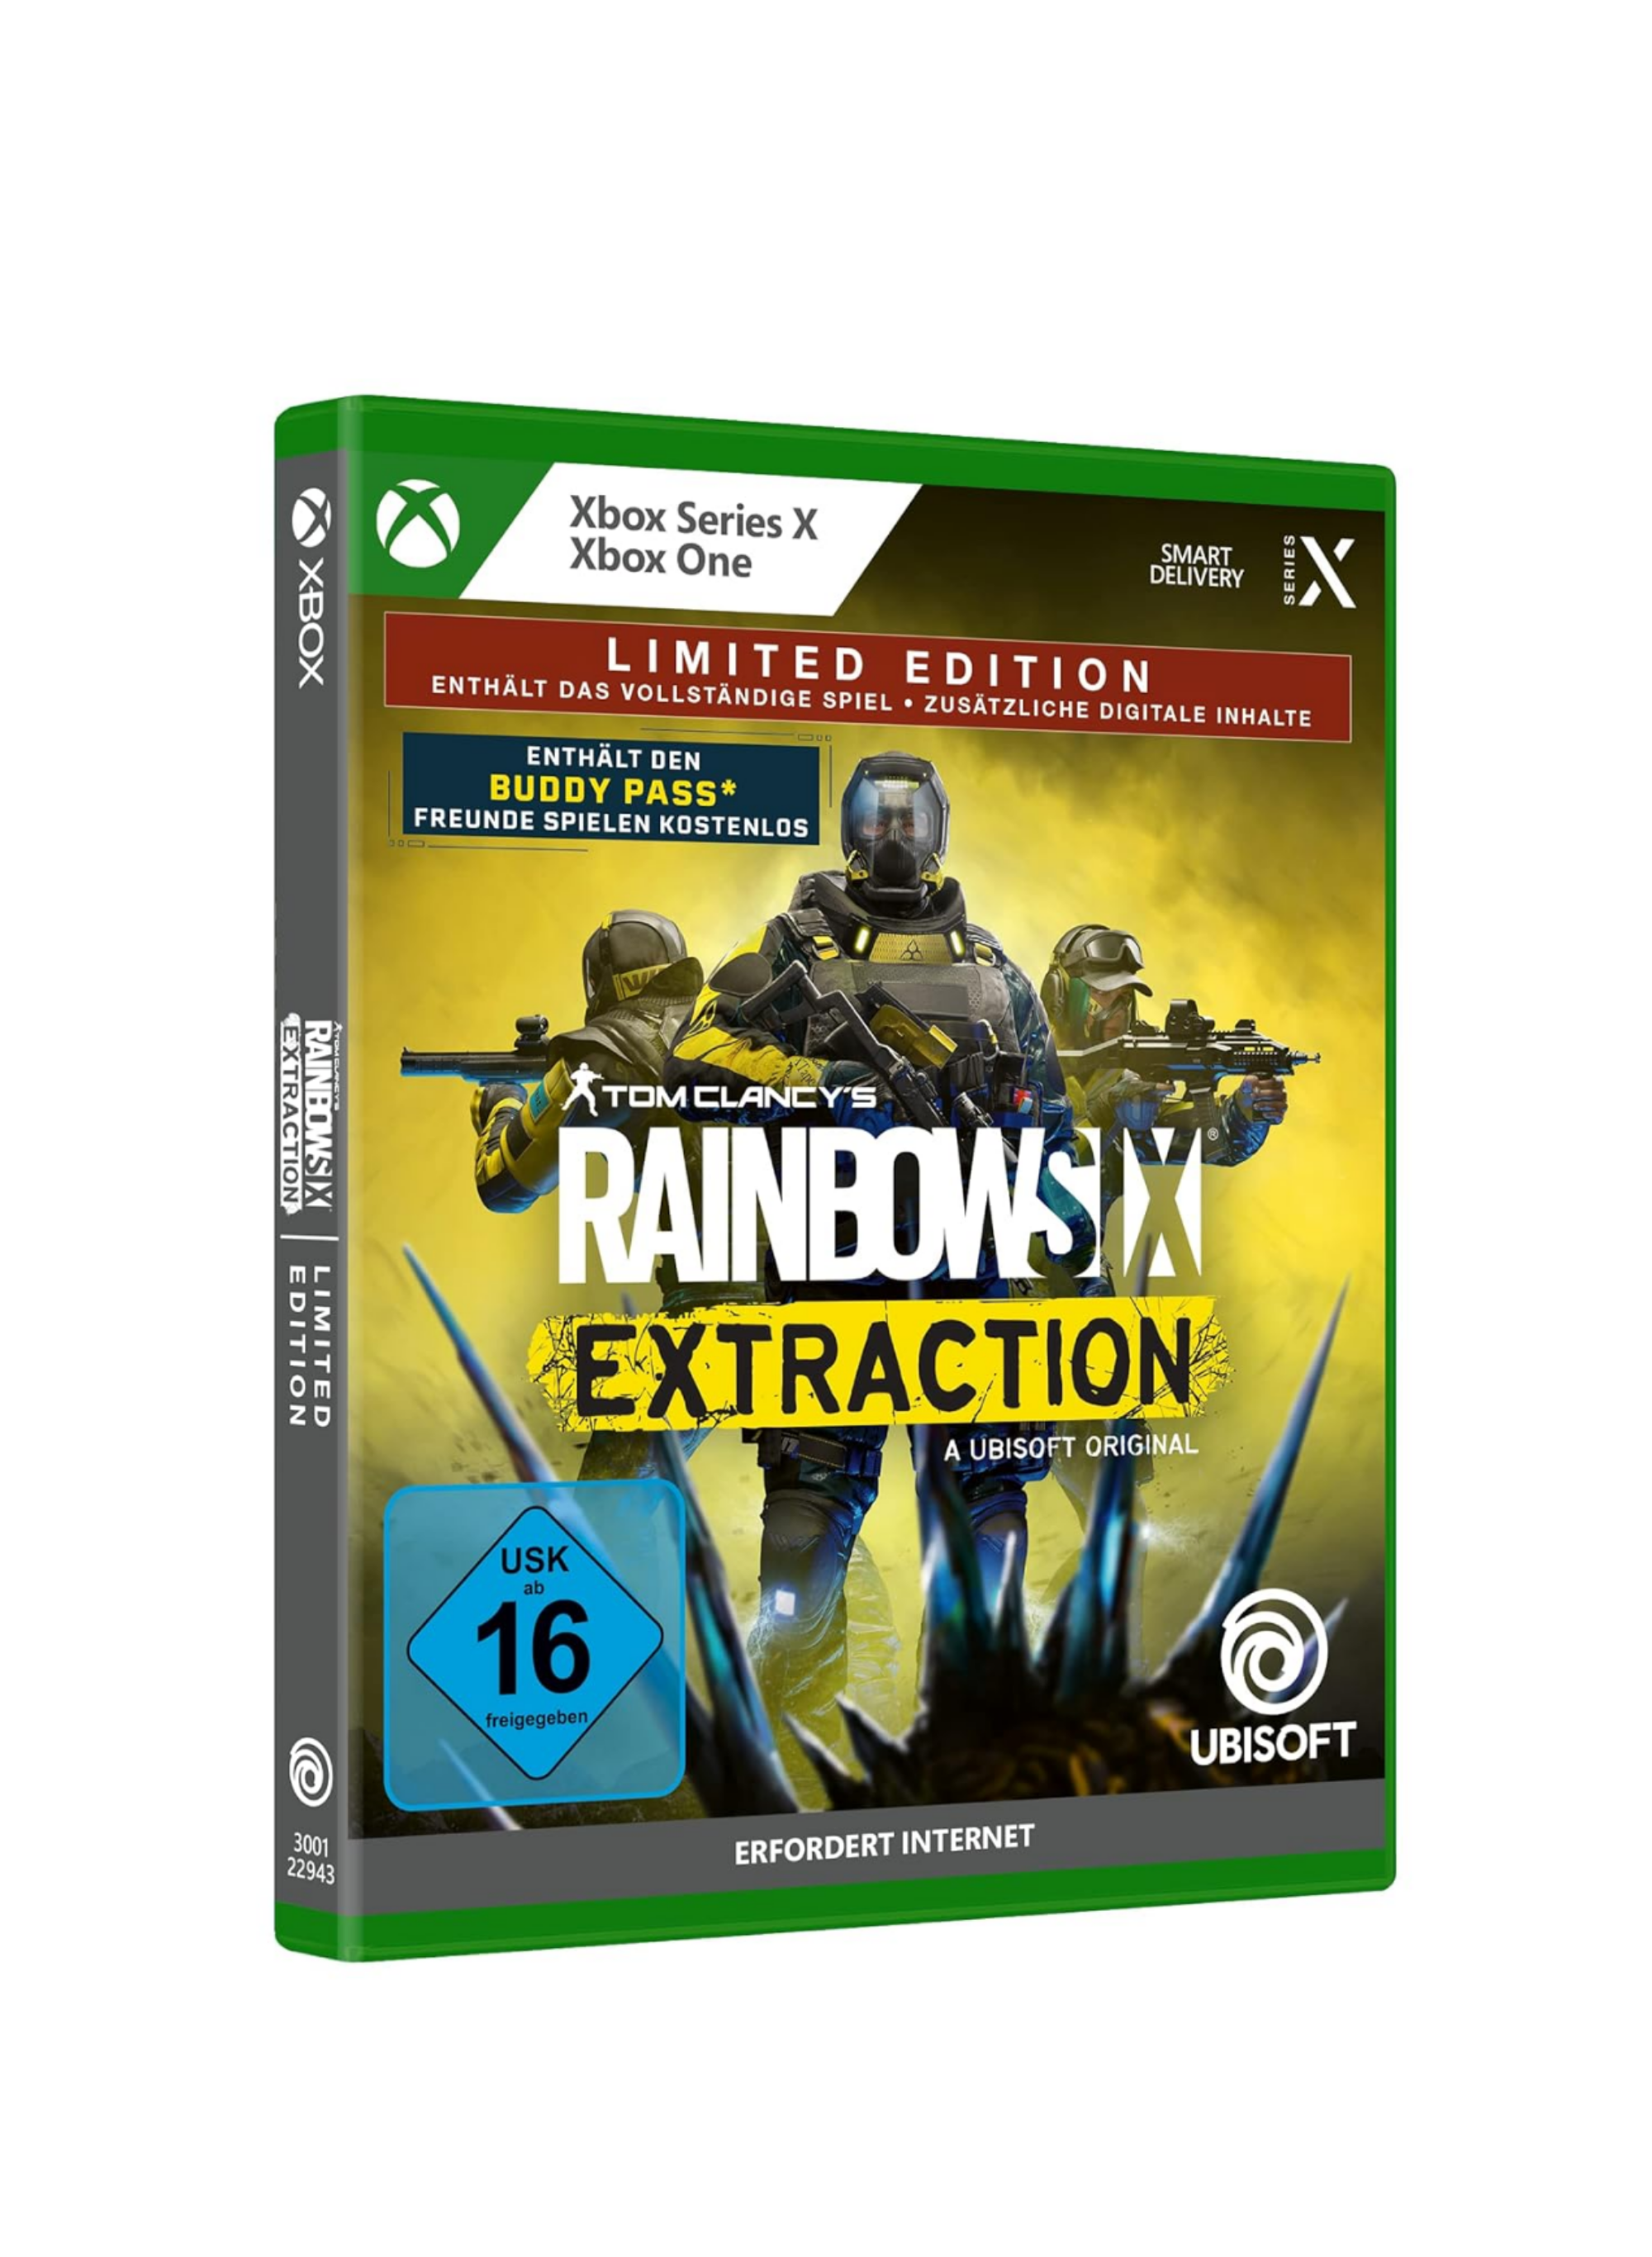 Rainbow Six Extraction – Limited Edition mit Buddy Pass Xbox one *Neu